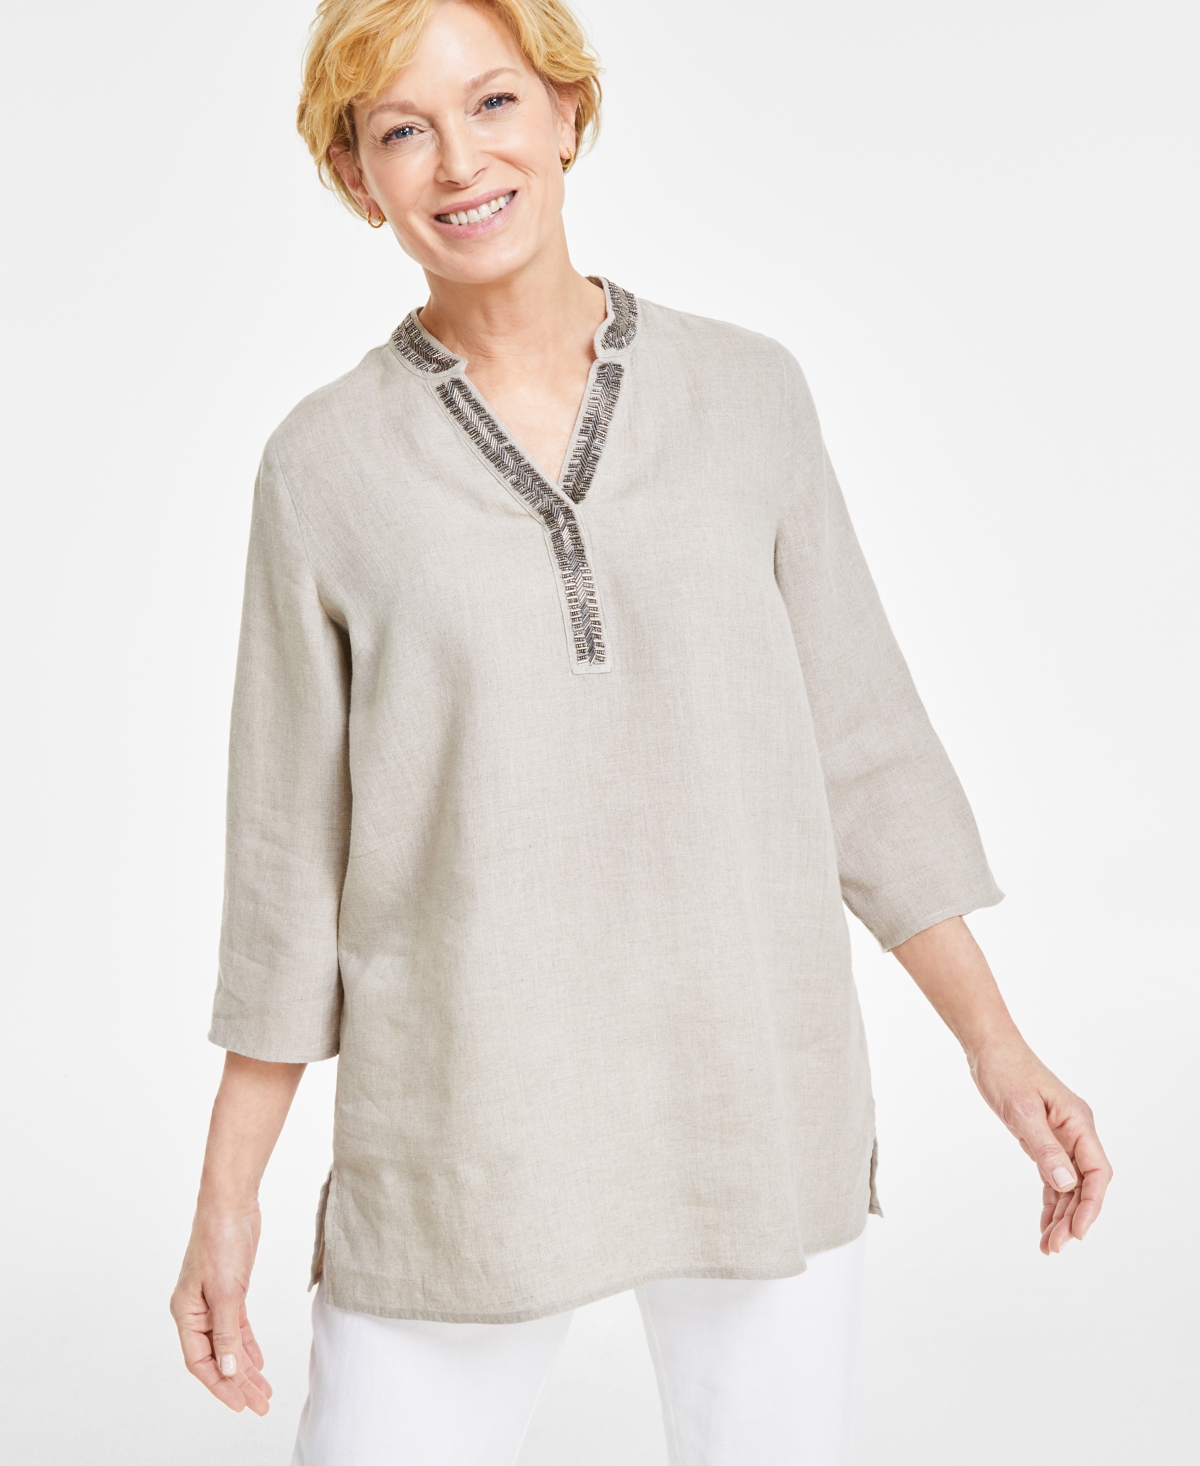 Women's 100% Linen Embellished Split-Neck Tunic, Created for Macy's - Flax Combo